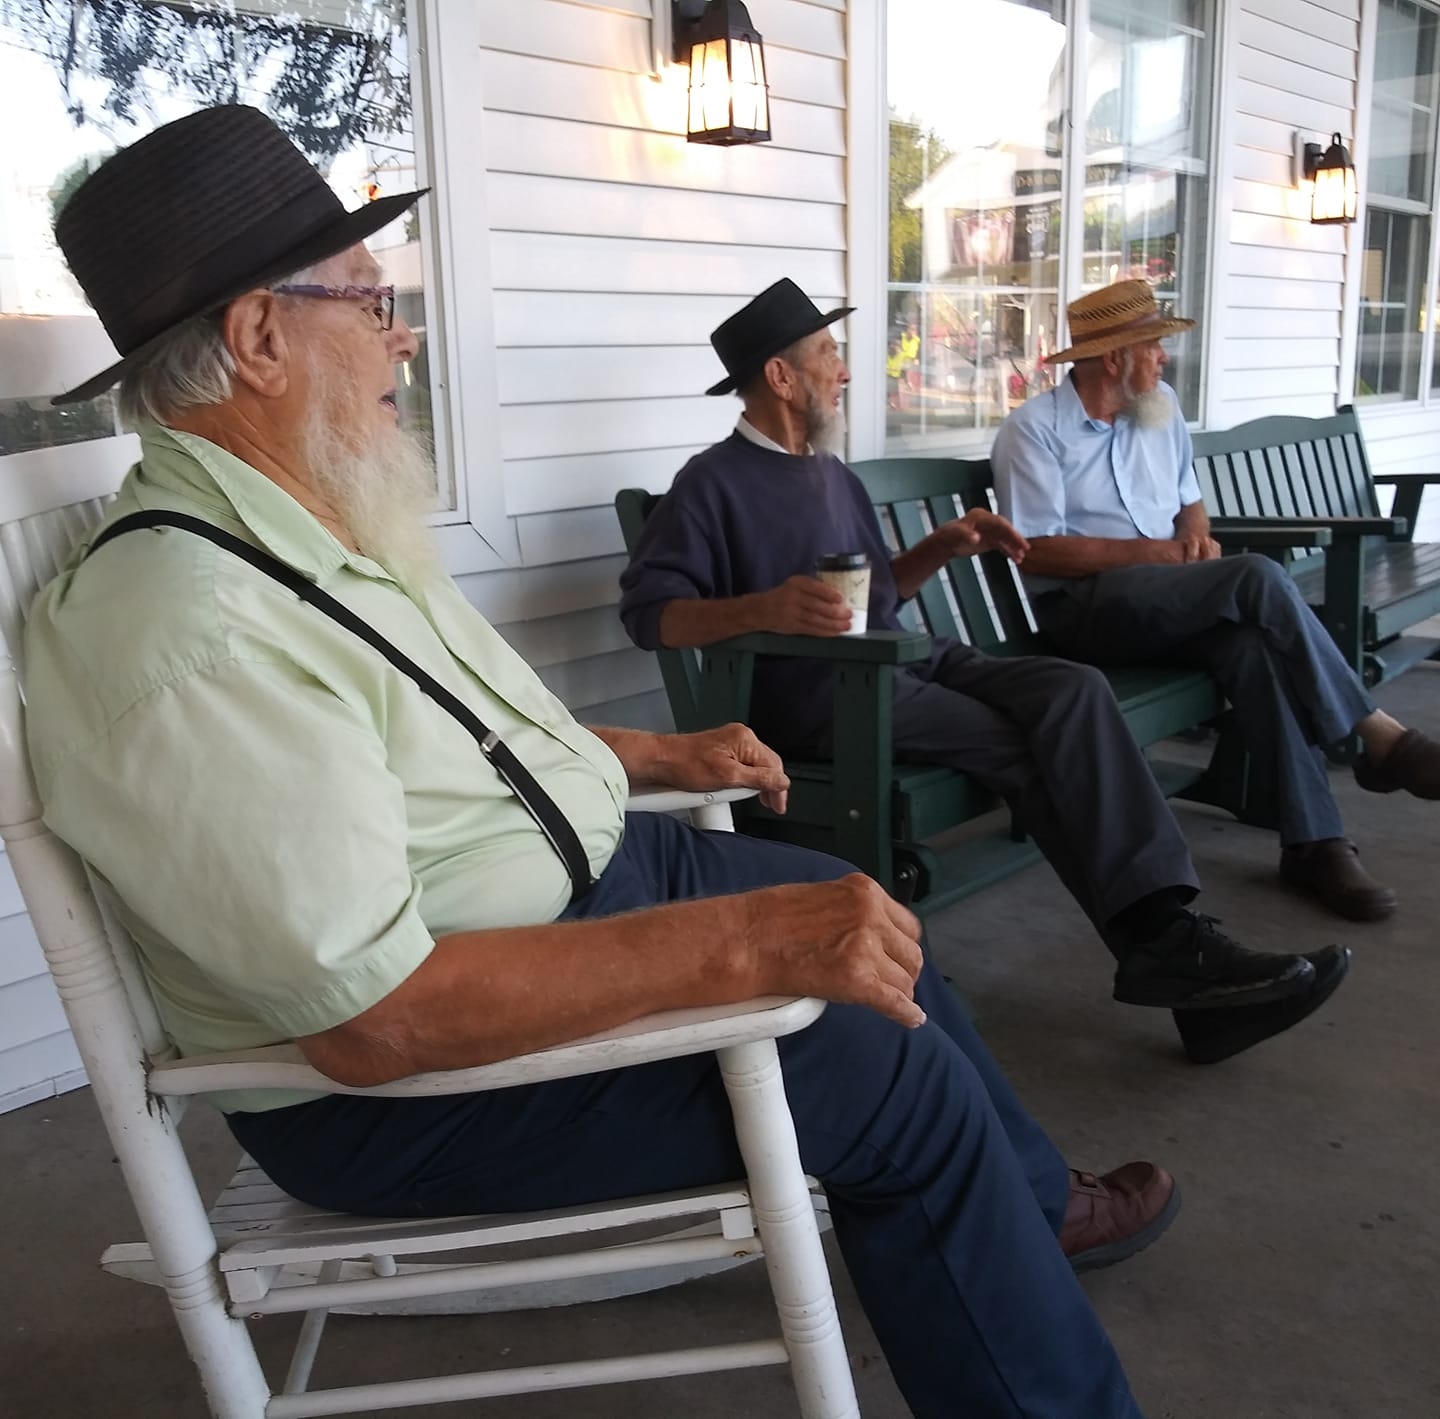 Amish men on a porch.